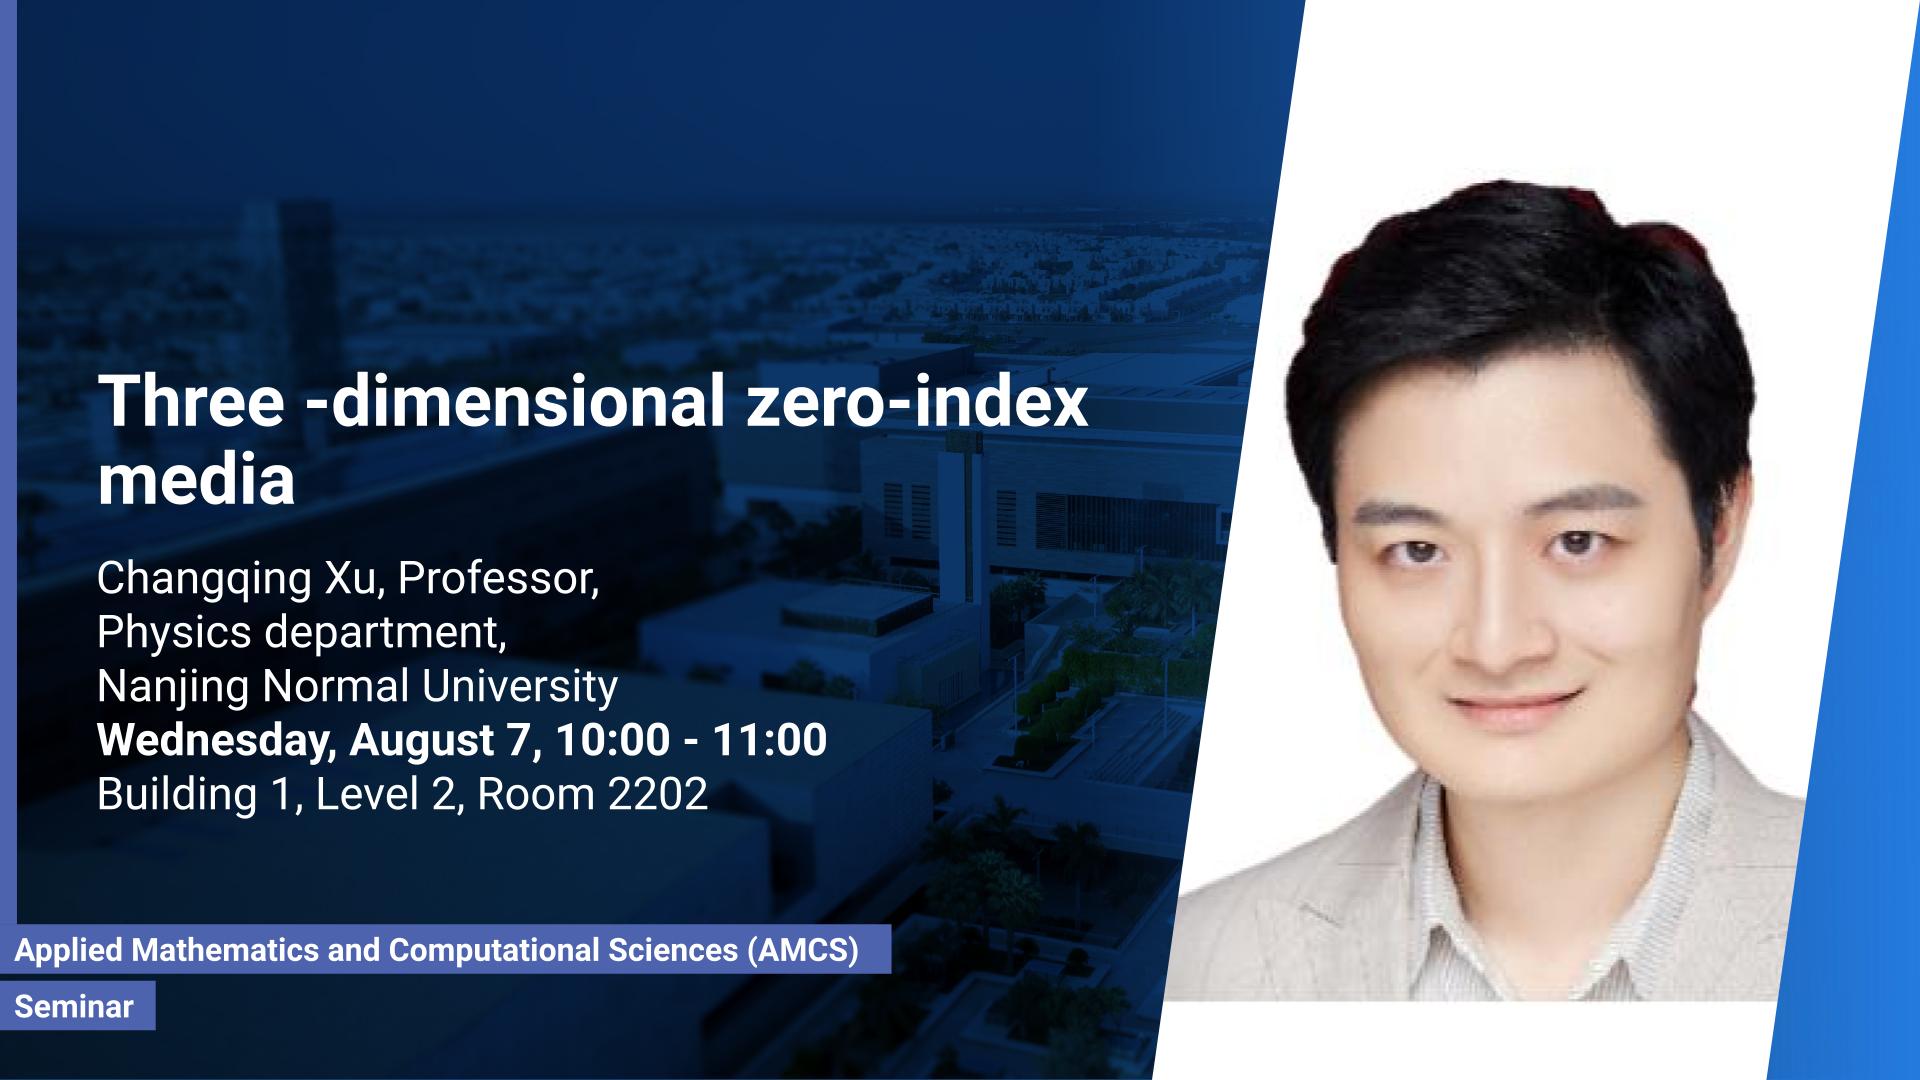 KAUST-CEMSE-AMCS-Seminar-Changqing Xu- Three-dimensional- zero-index-Media.jpg